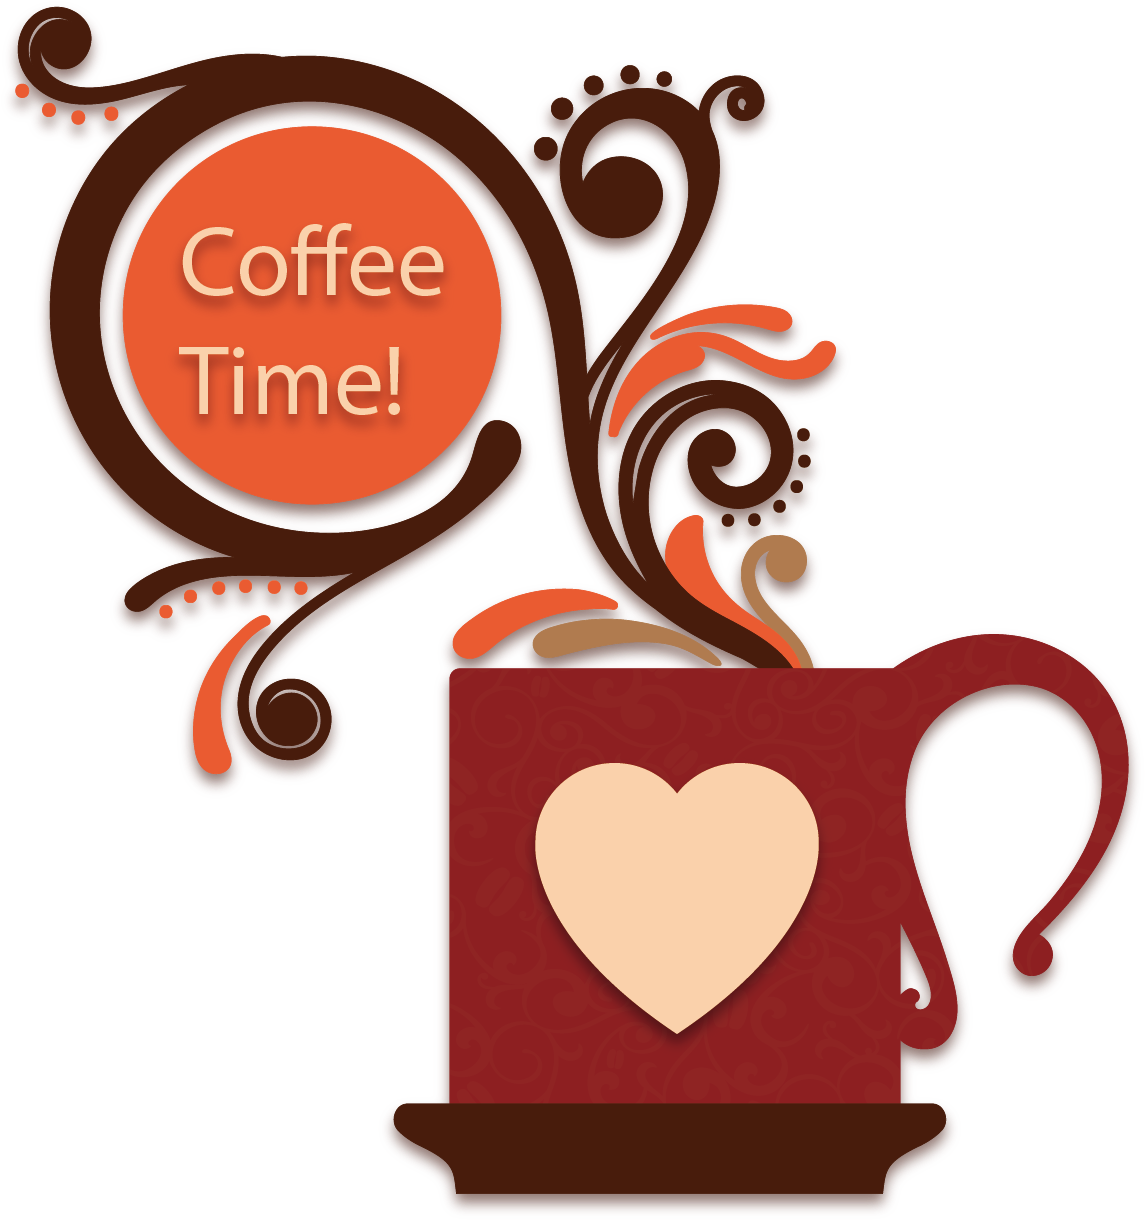 Coffee Cup Cafe Mug - Coffee Cup Cafe Mug (1298x1311)